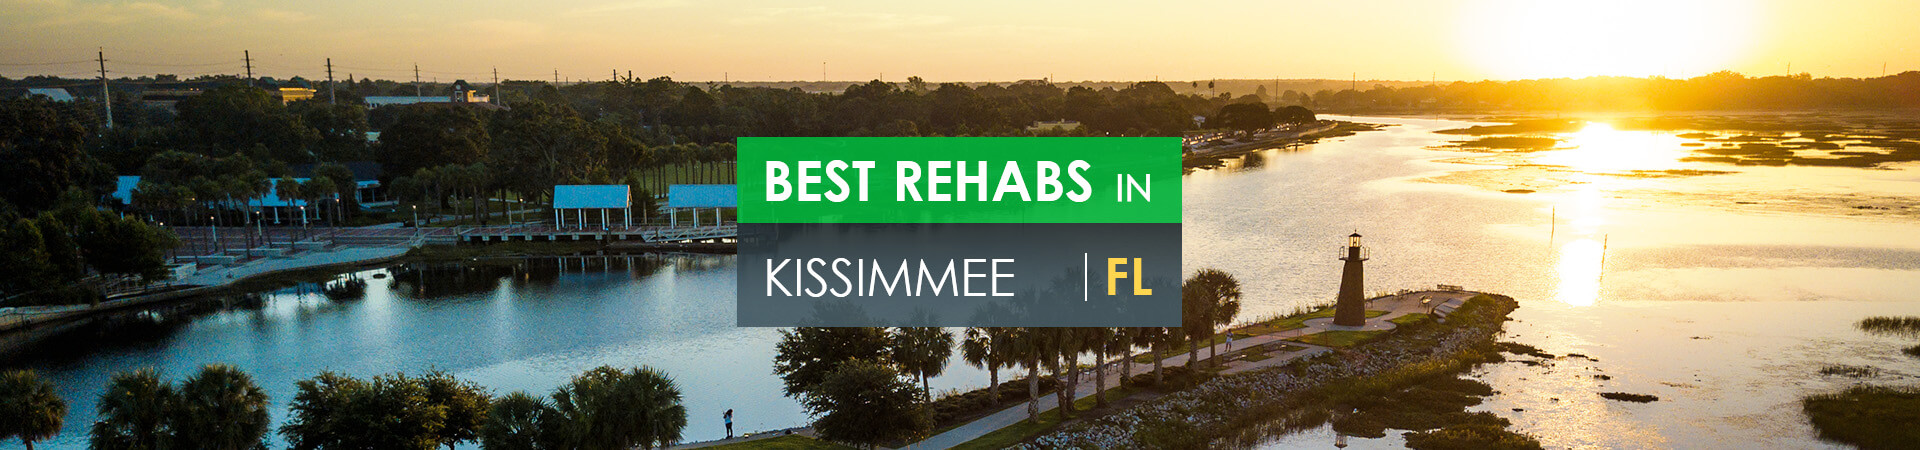 Best rehabs in Kissimmee, FL